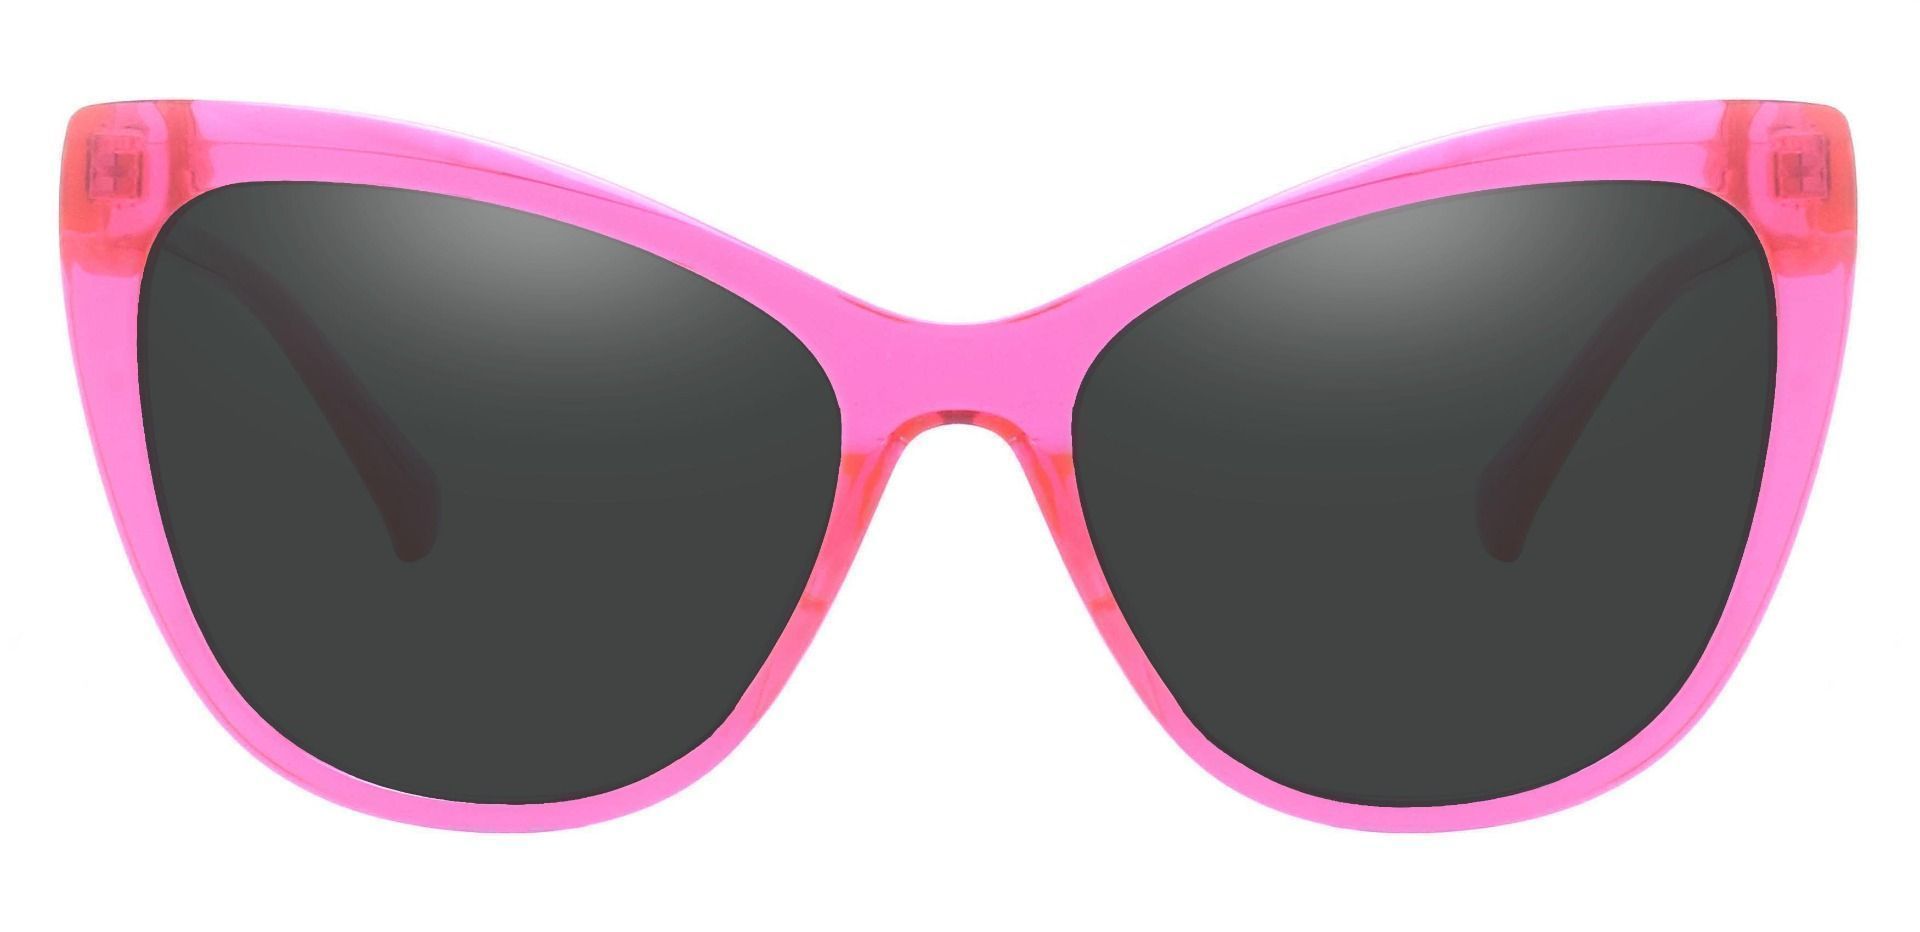 Neon Cat Eye Sunglasses - Pink